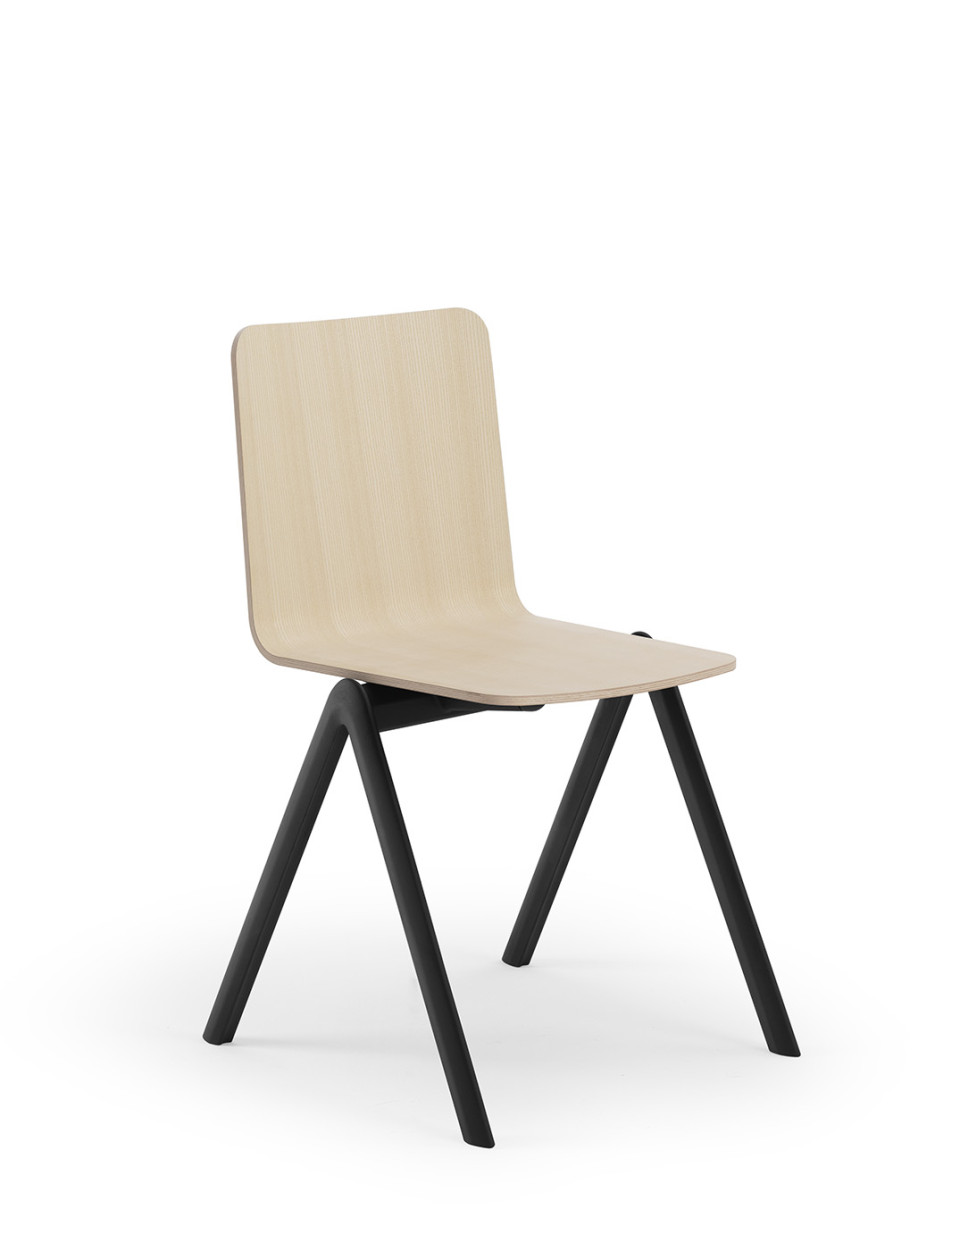 Chaise Stack avec assise en bois